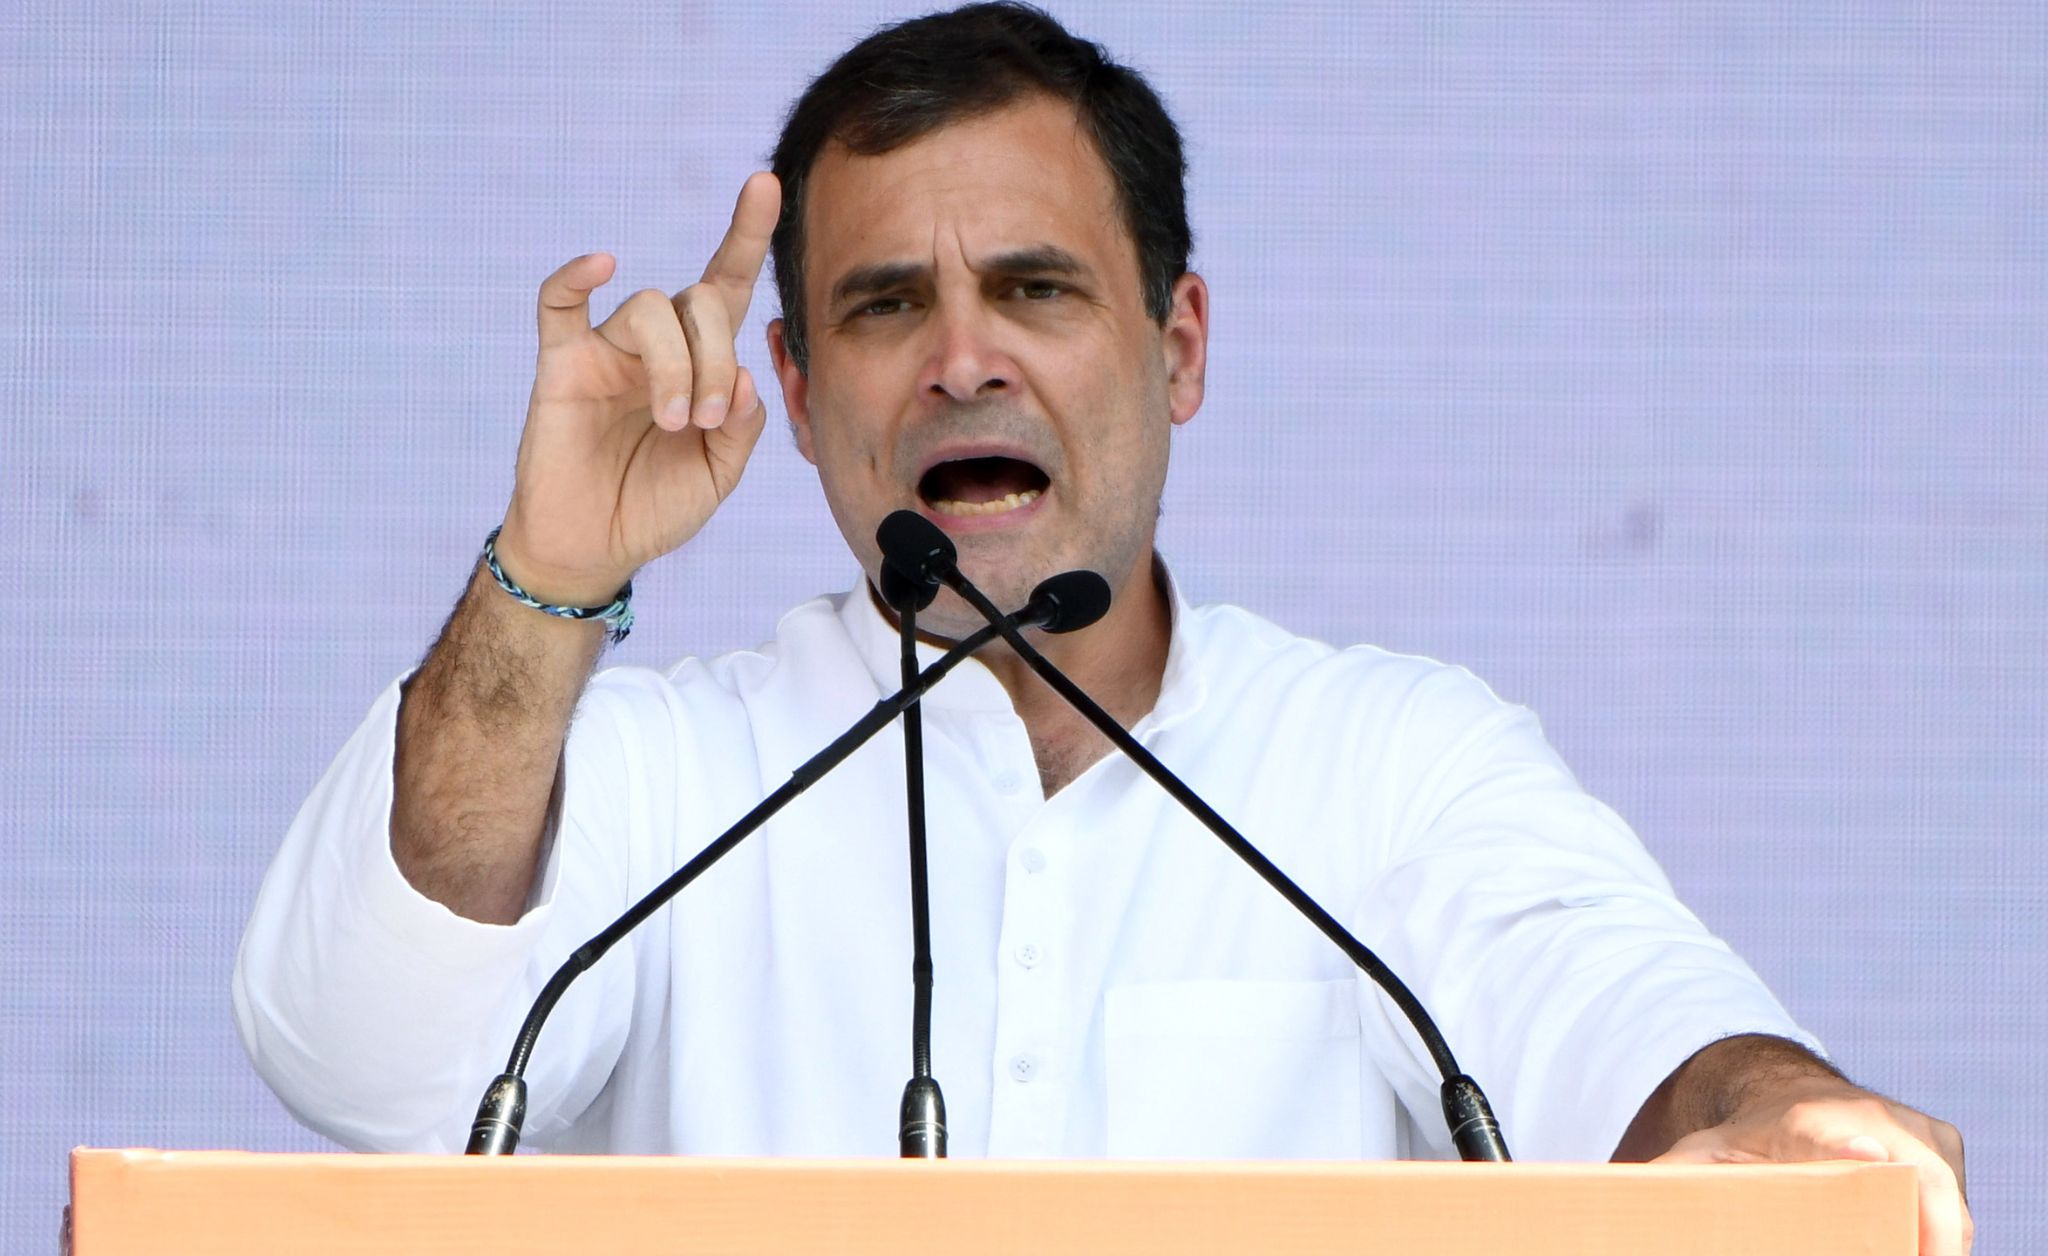 Rahul Gandhi Unlikely To Contest Congress Presidential Polls Due To Bharat Jodo Yatra